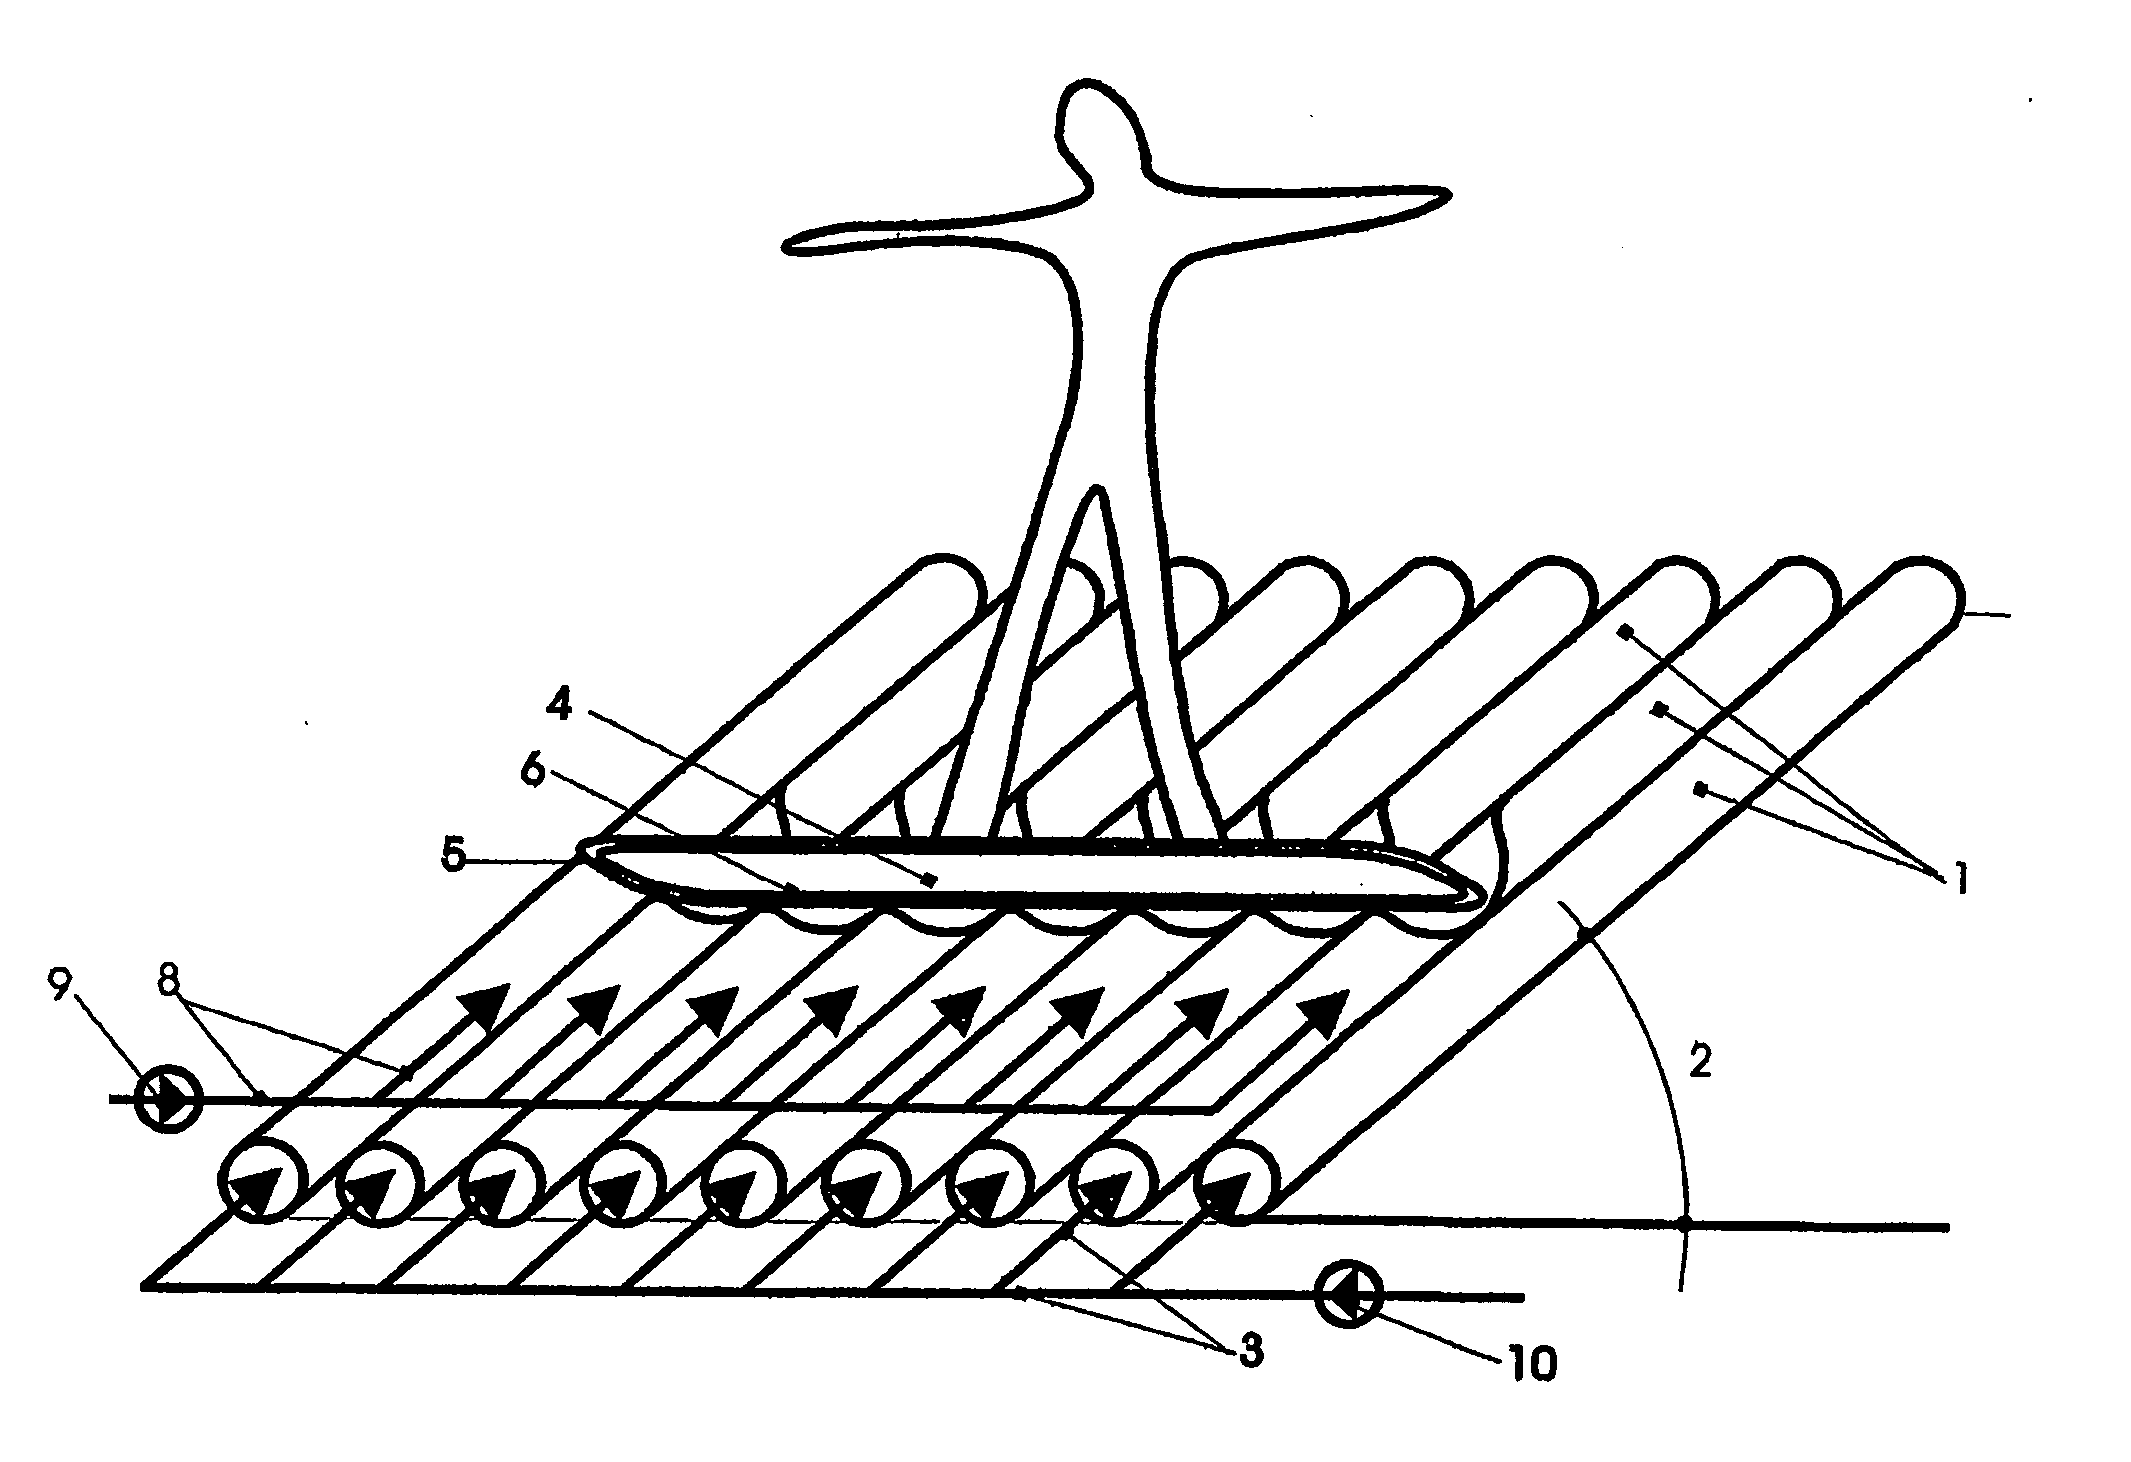 Sliding device for surfboards